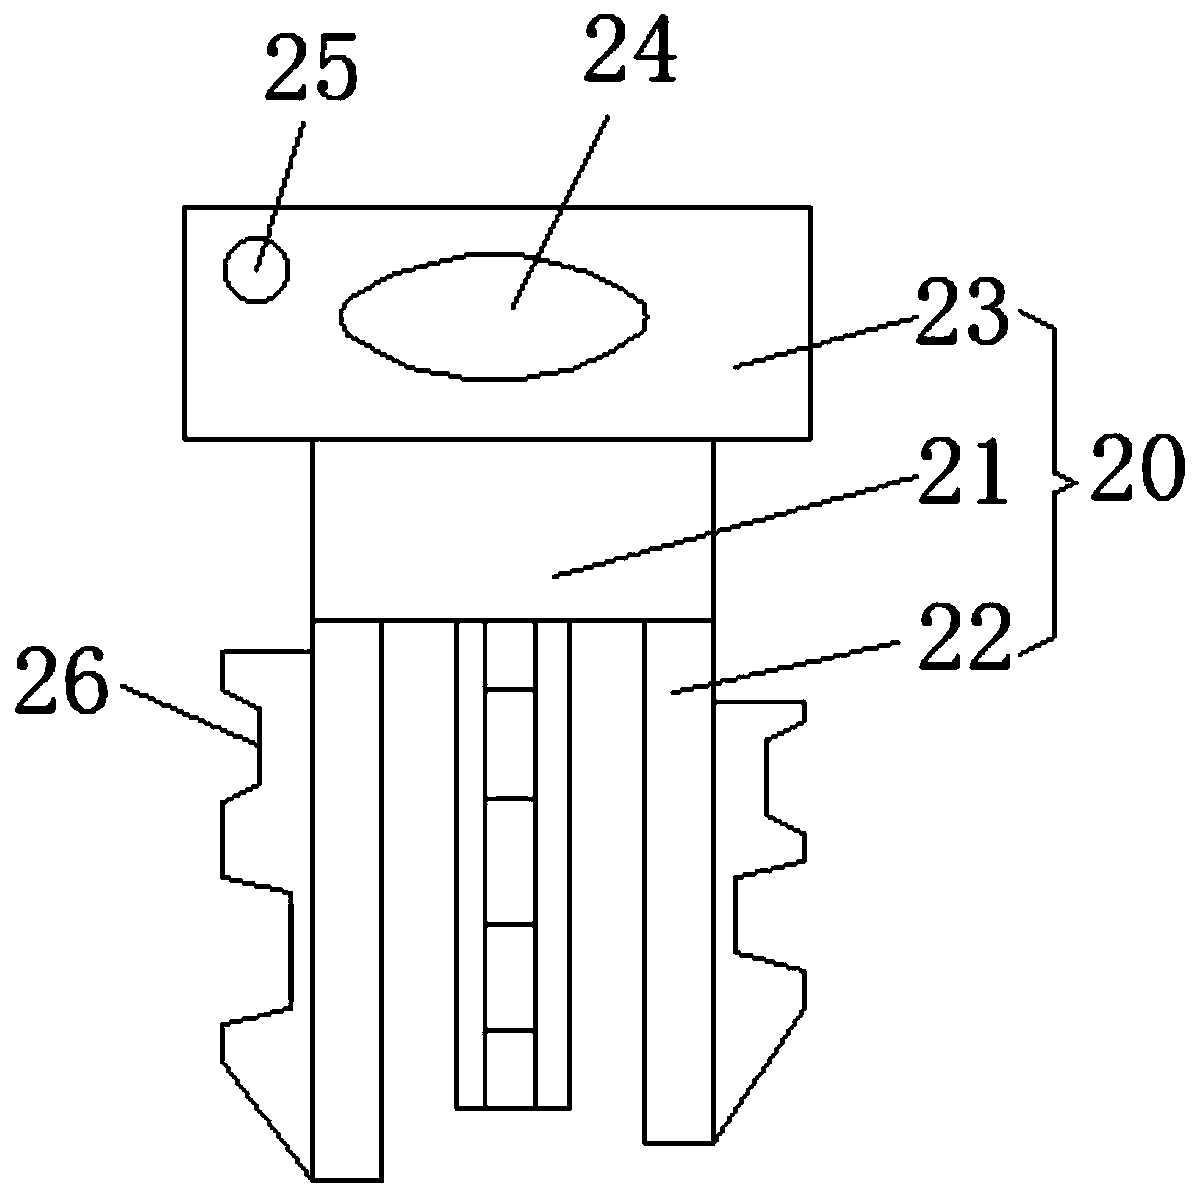 Novel pin tumbler lock cylinder capable of avoiding technical opening